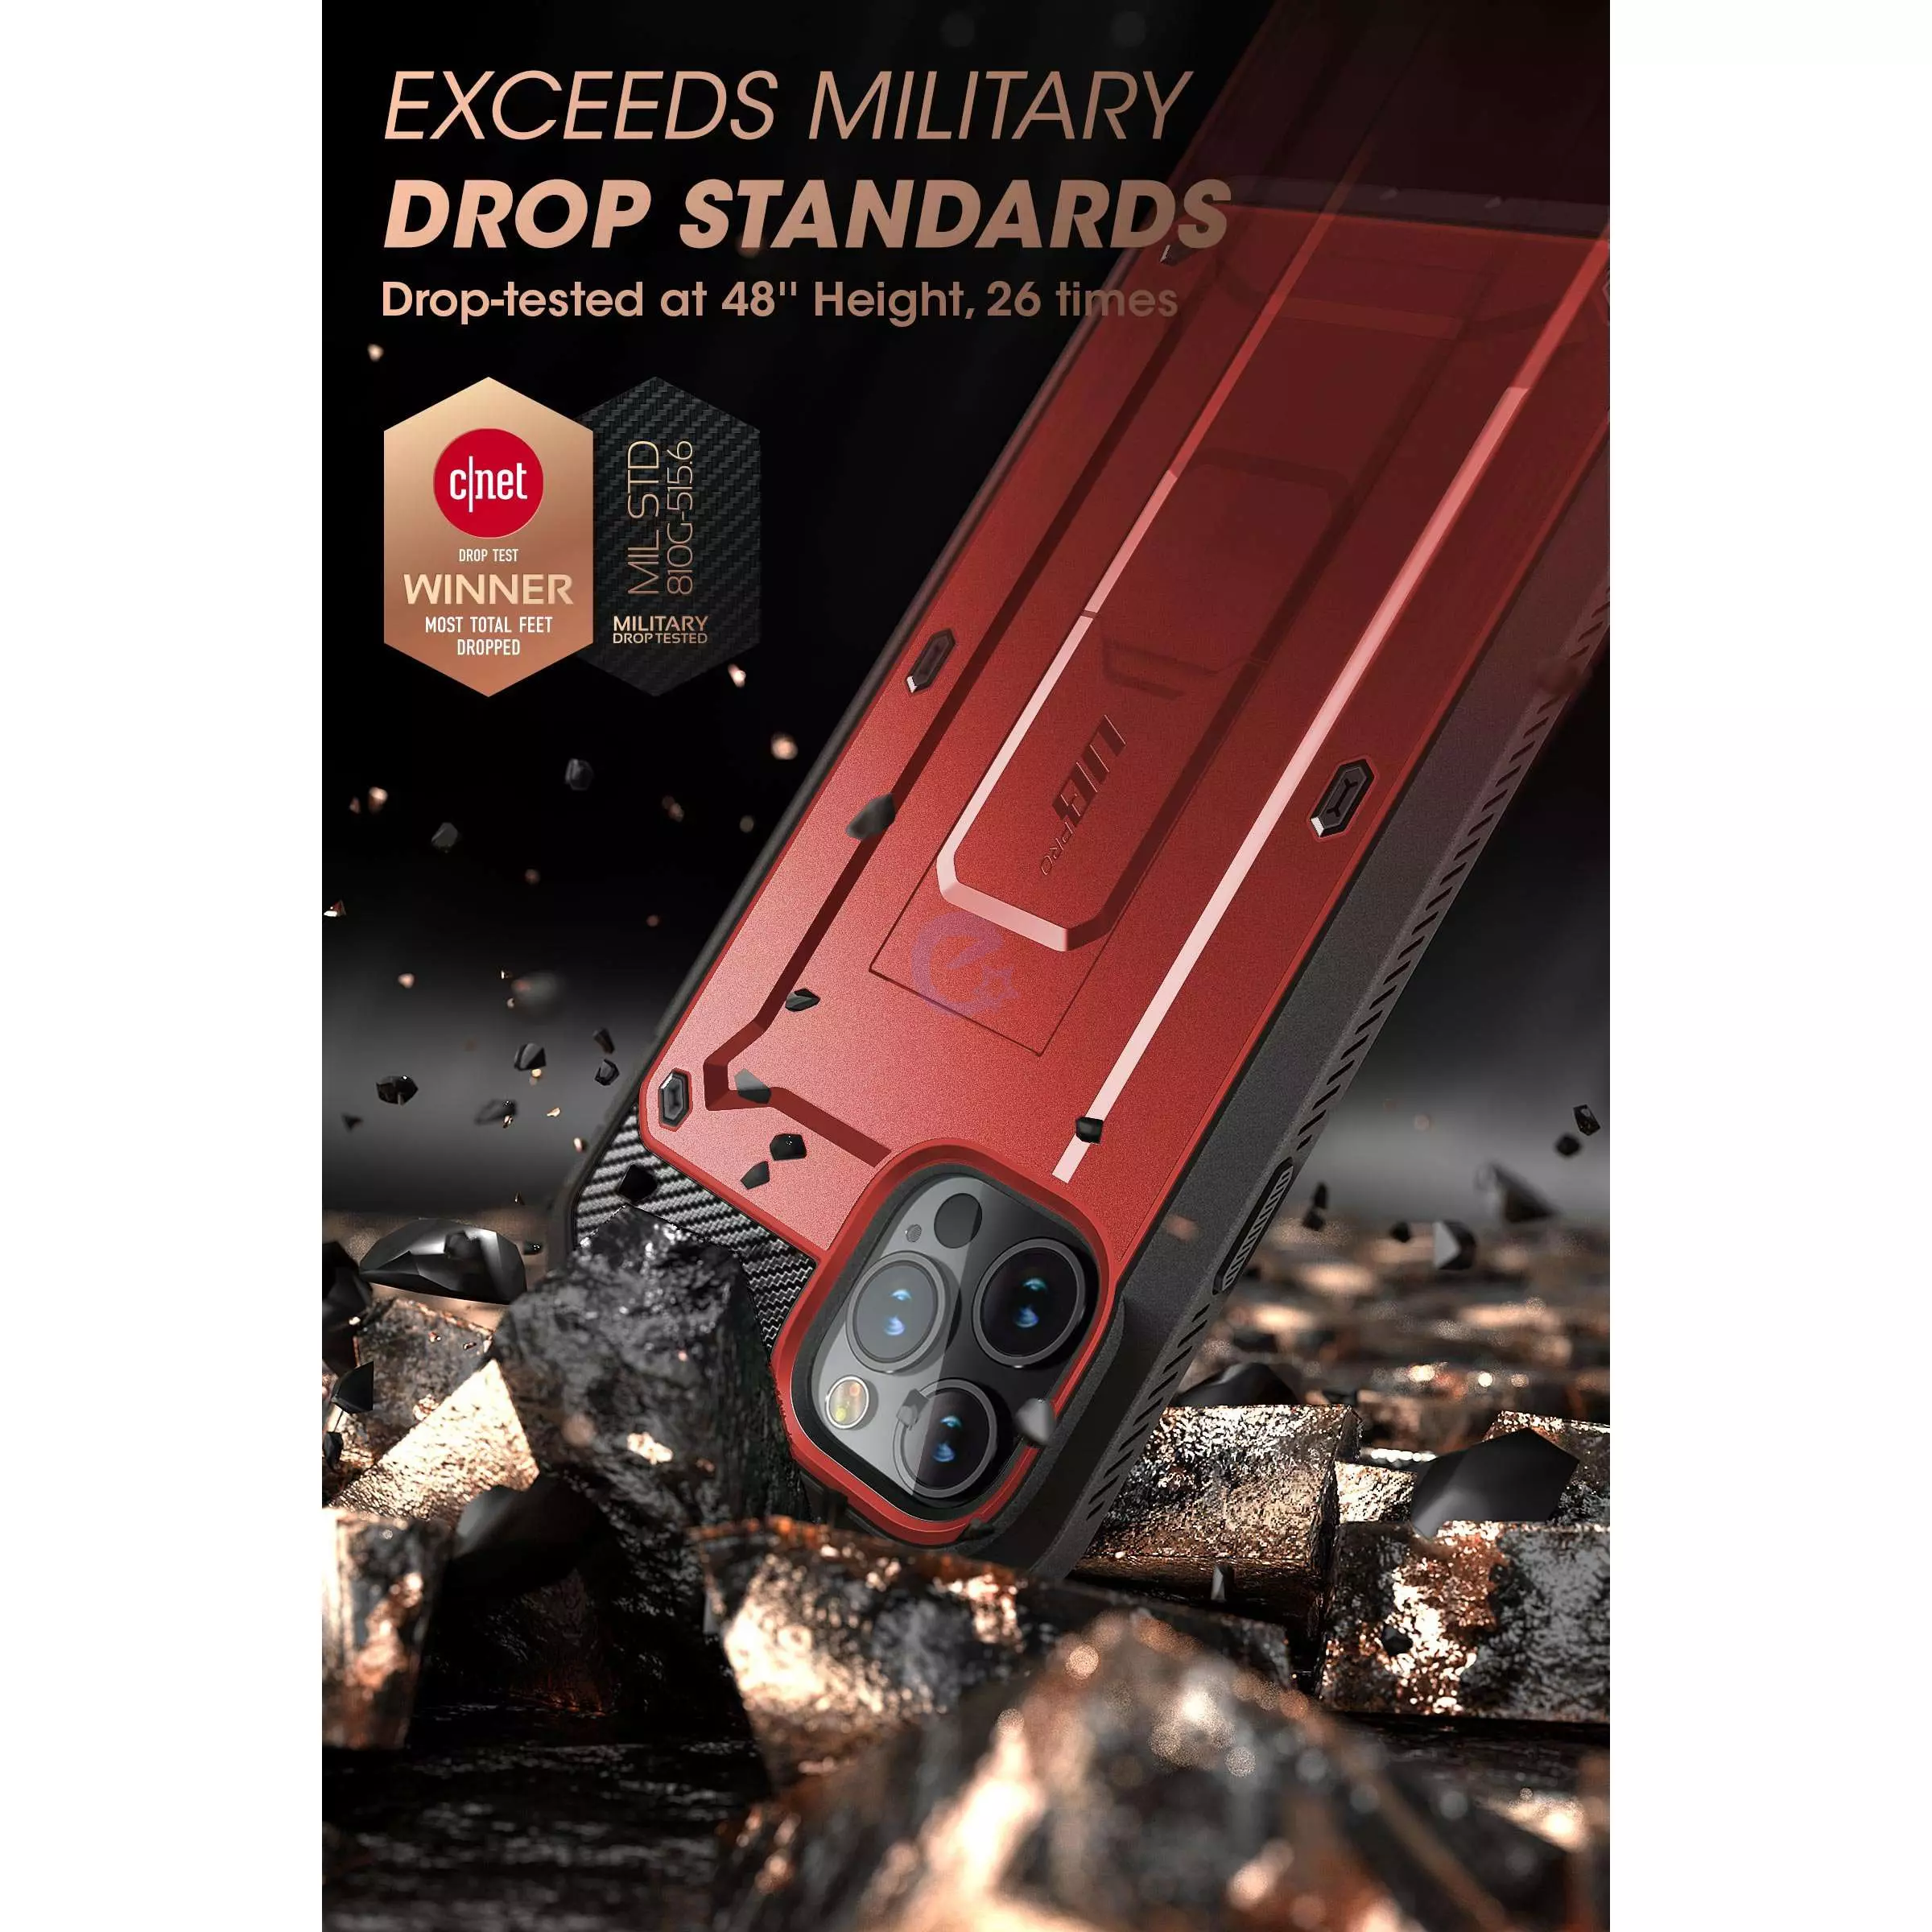 Чехол бампер для iPhone 13 Pro Max Supcase Unicorn Beetle PRO Metallic Red (Металлик красный) 843439114524